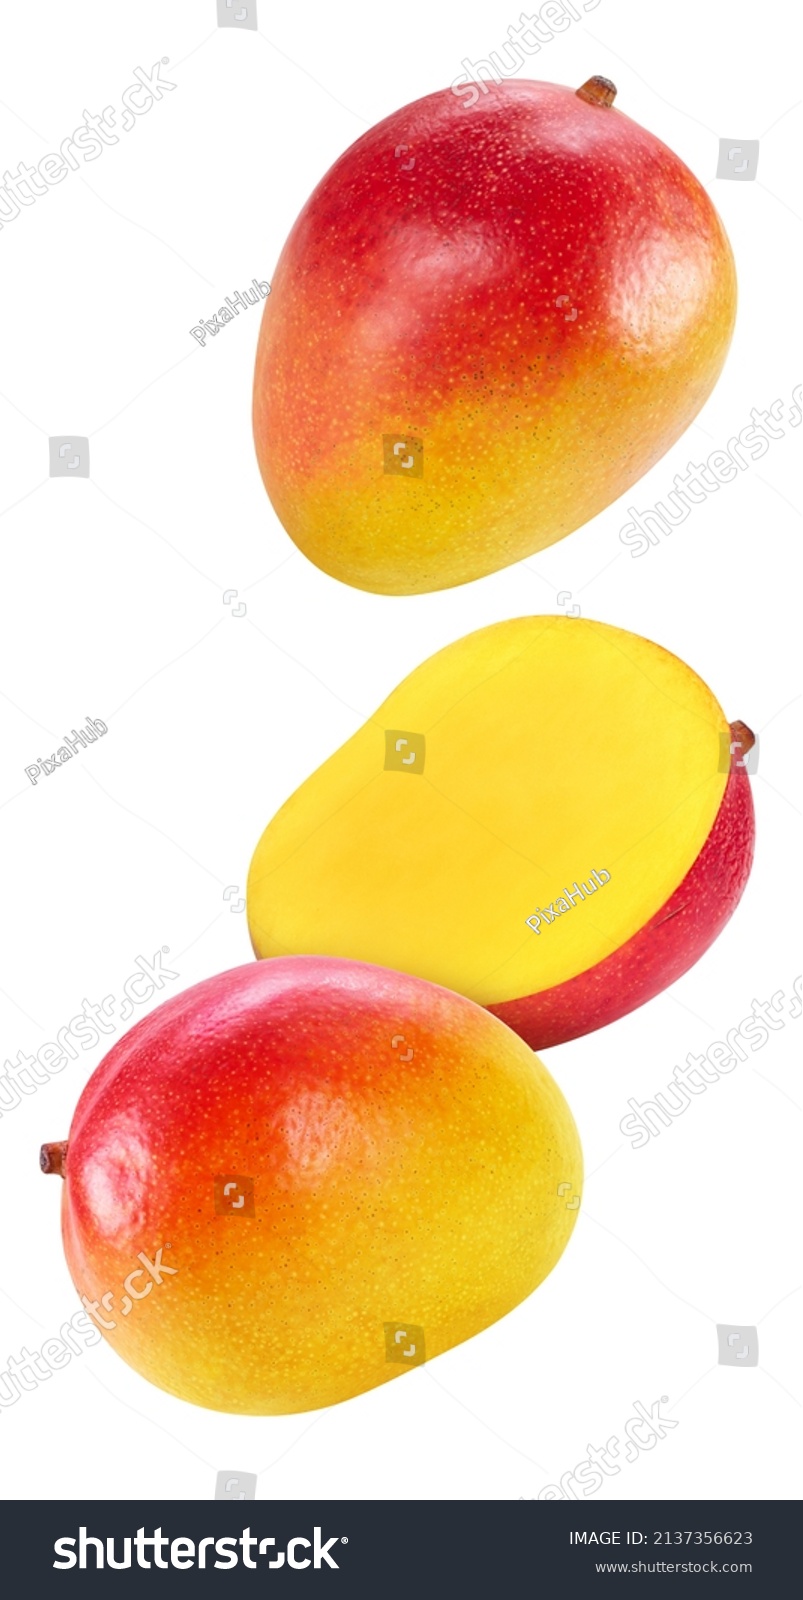 1,124 Flying mango Images, Stock Photos & Vectors | Shutterstock